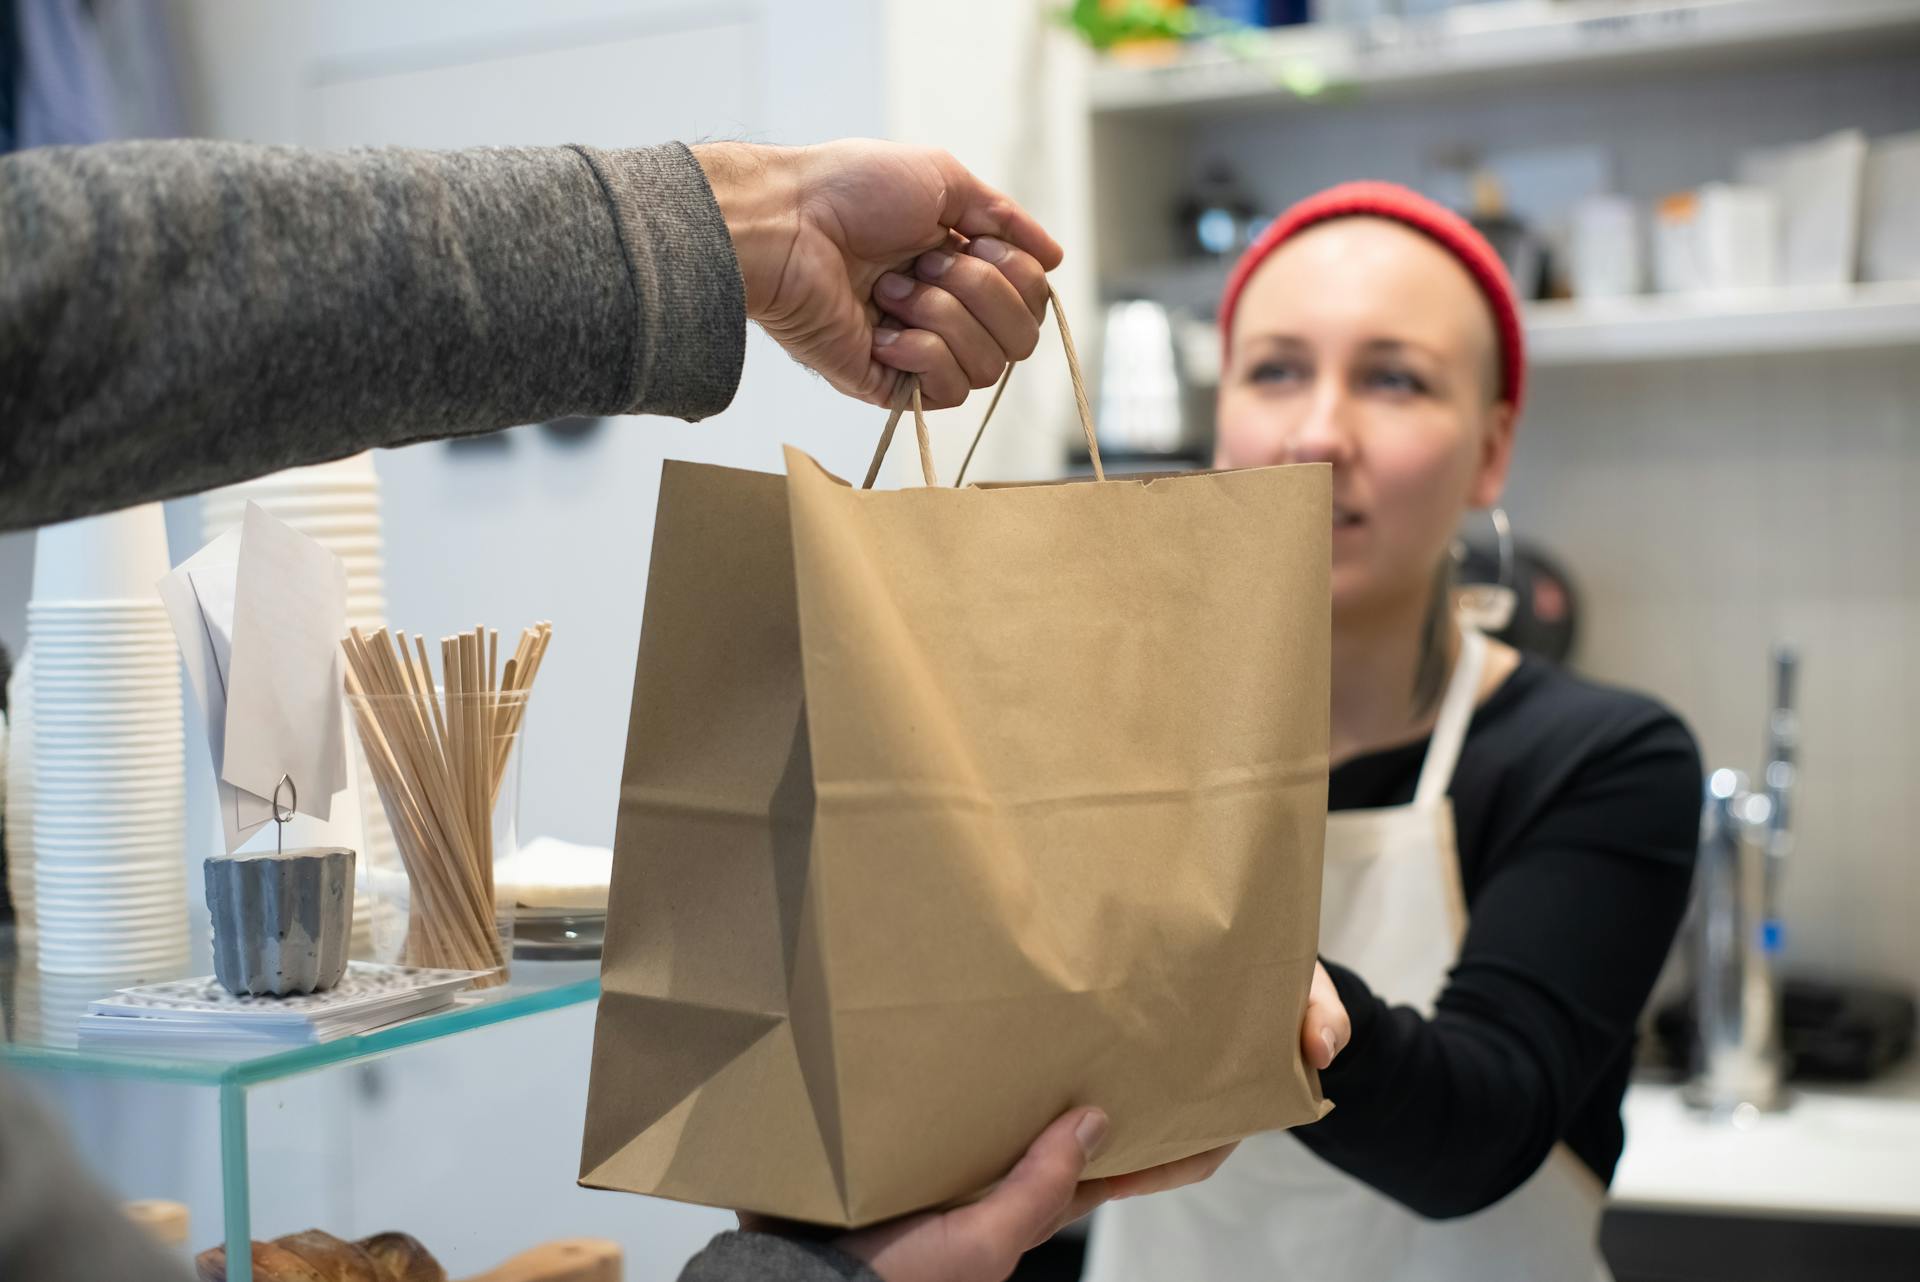 A restaurant worker handing a brown bag to a customer | Source: Pexels